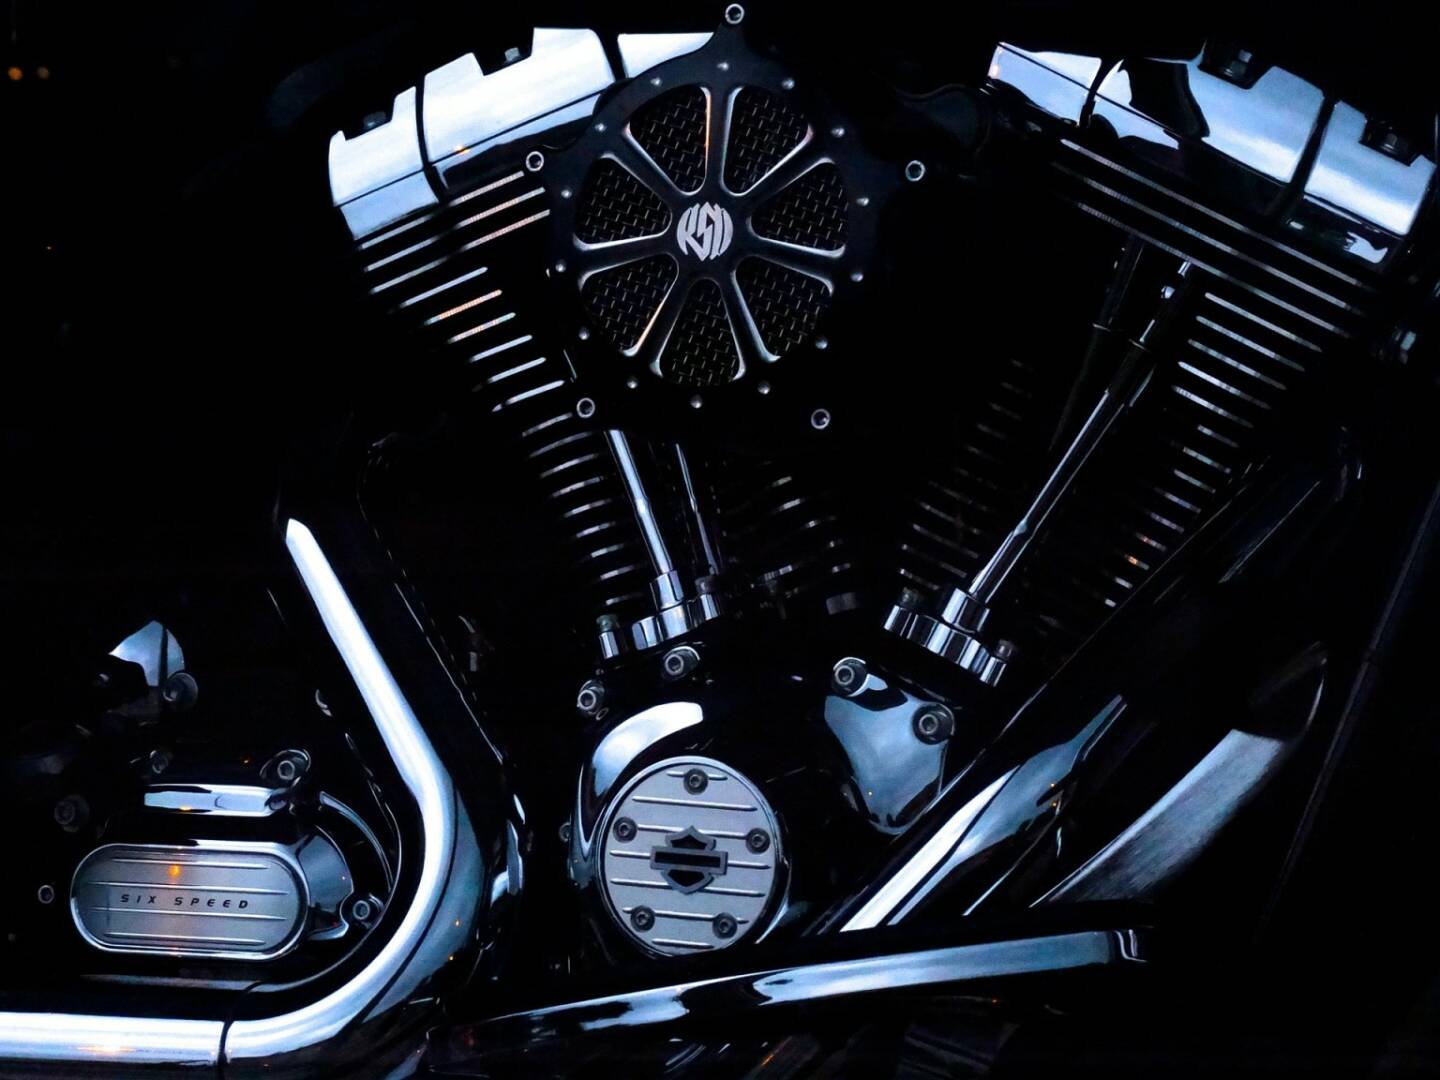 Motor, Harley Davidson (Bild: Pixabay/422737 https://pixabay.com/de/harley-davidson-motorräder-chrom-459594/ )